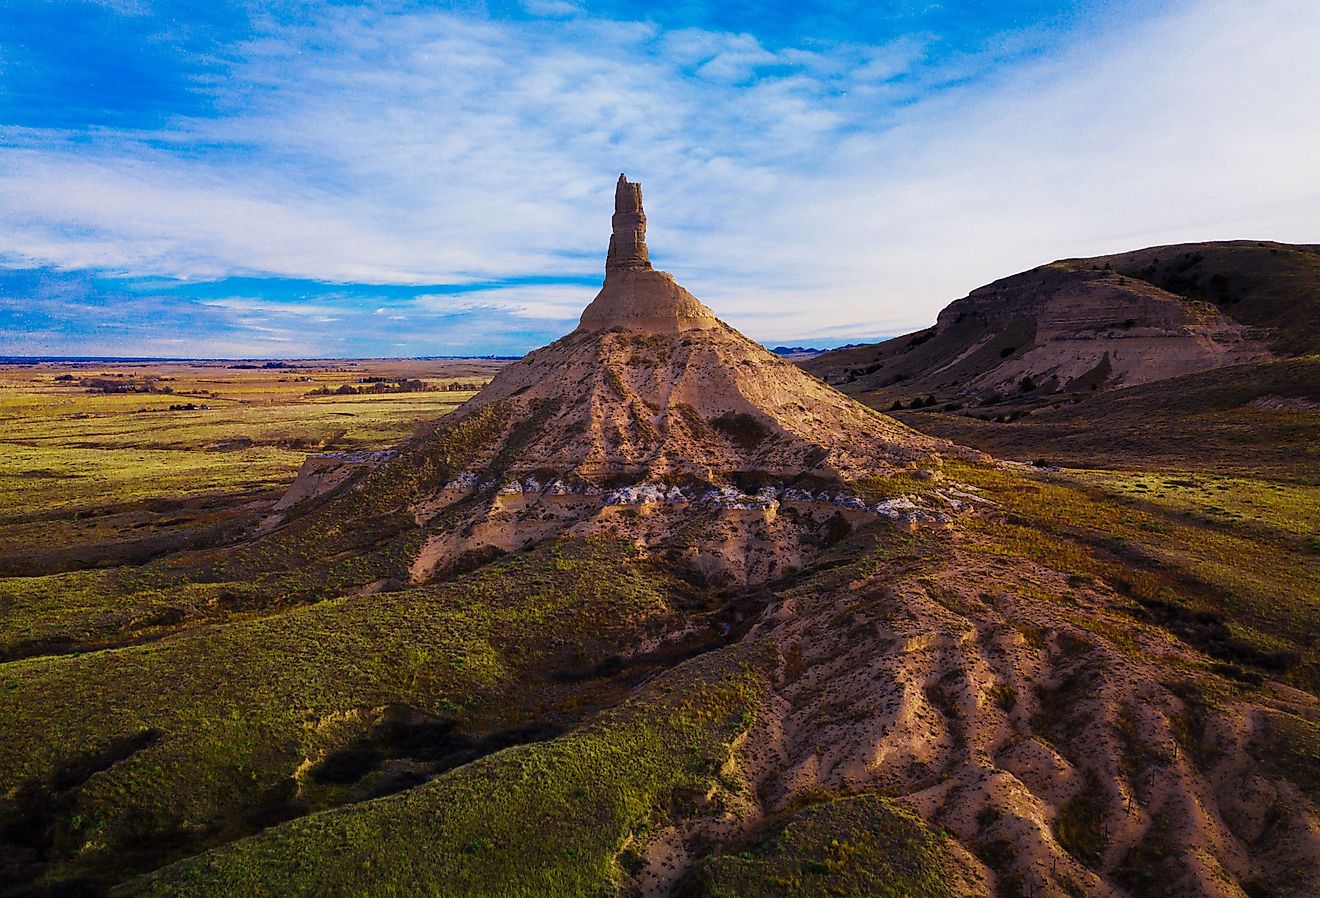 A rare and breathtaking view of the historic Chimney Rock near Bayard, Nebraska.